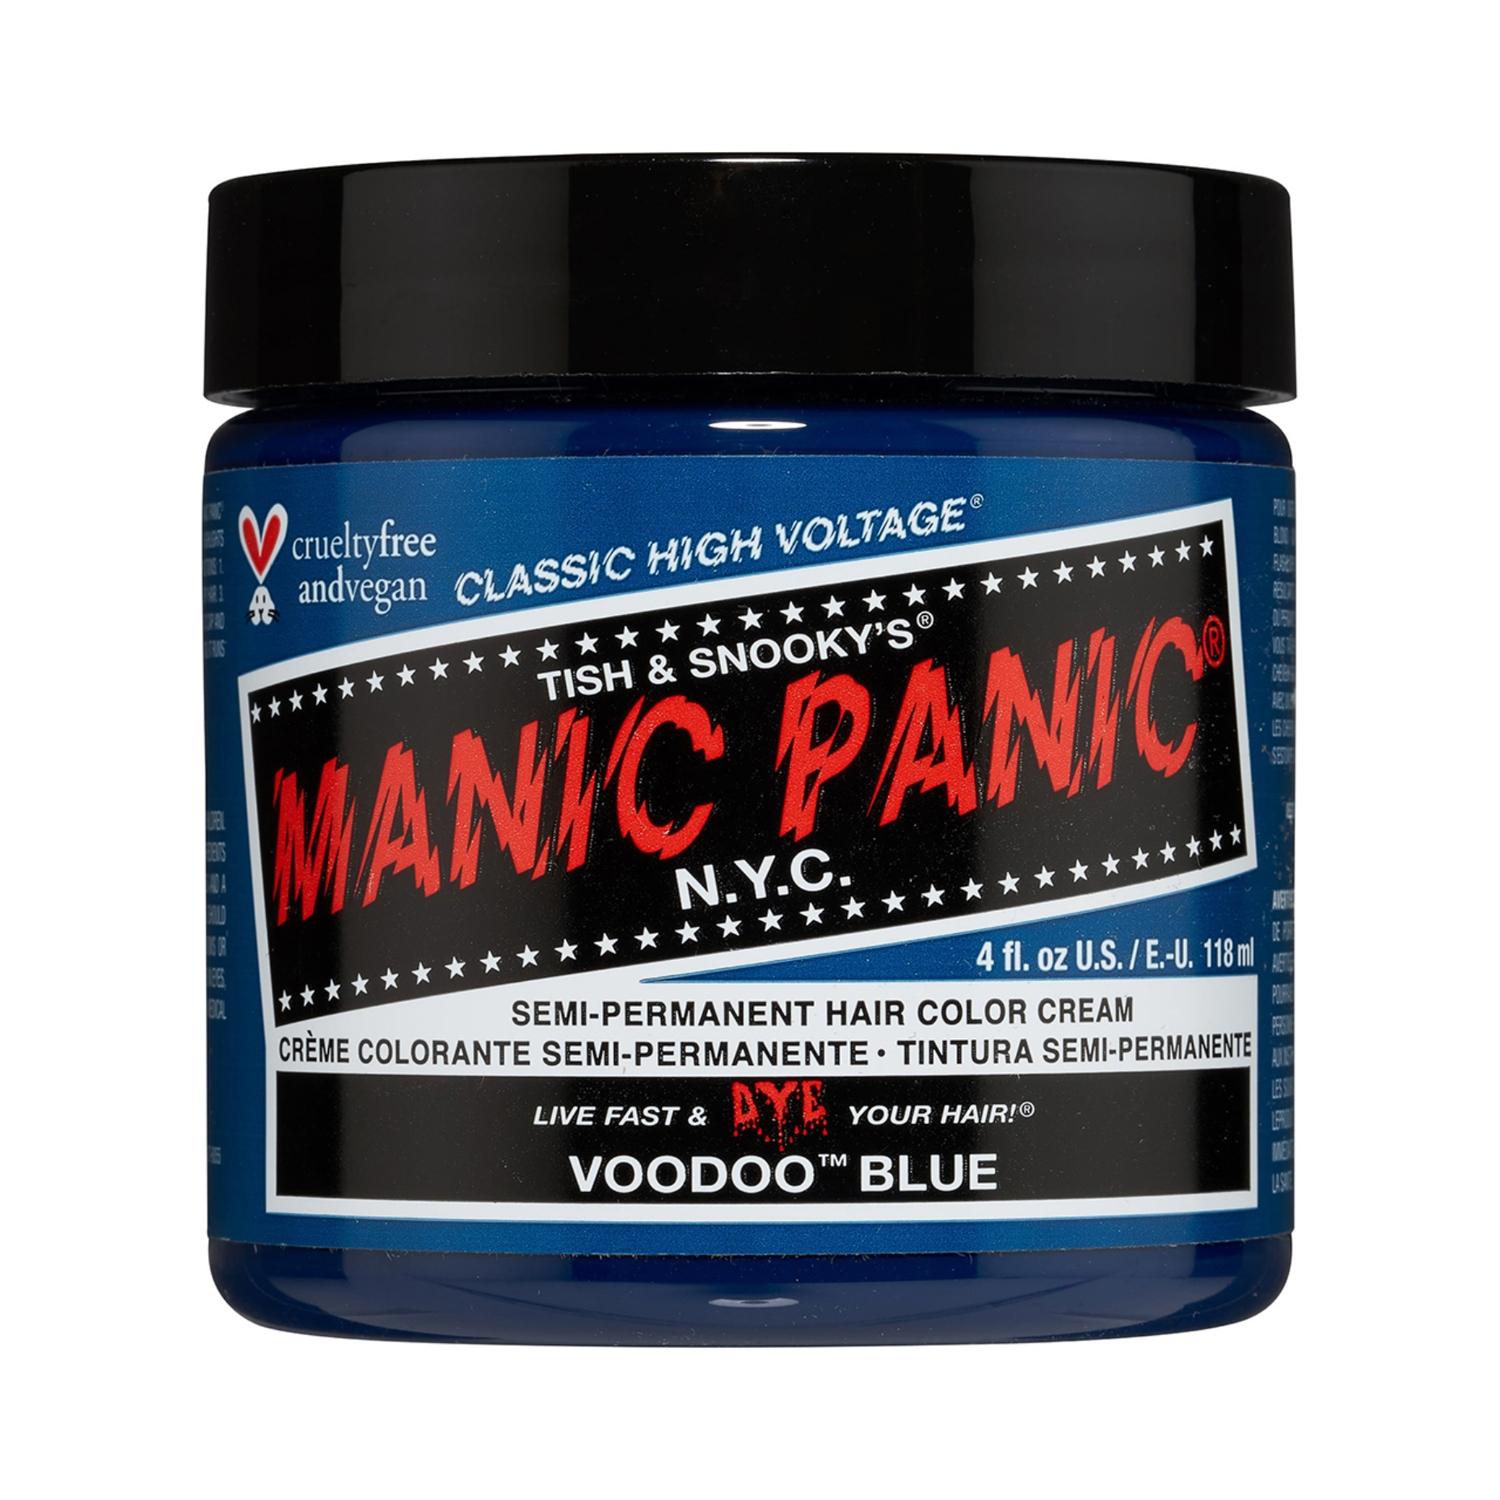 manic panic classic high voltage semi permanent hair color cream - voodoo blue (118ml)